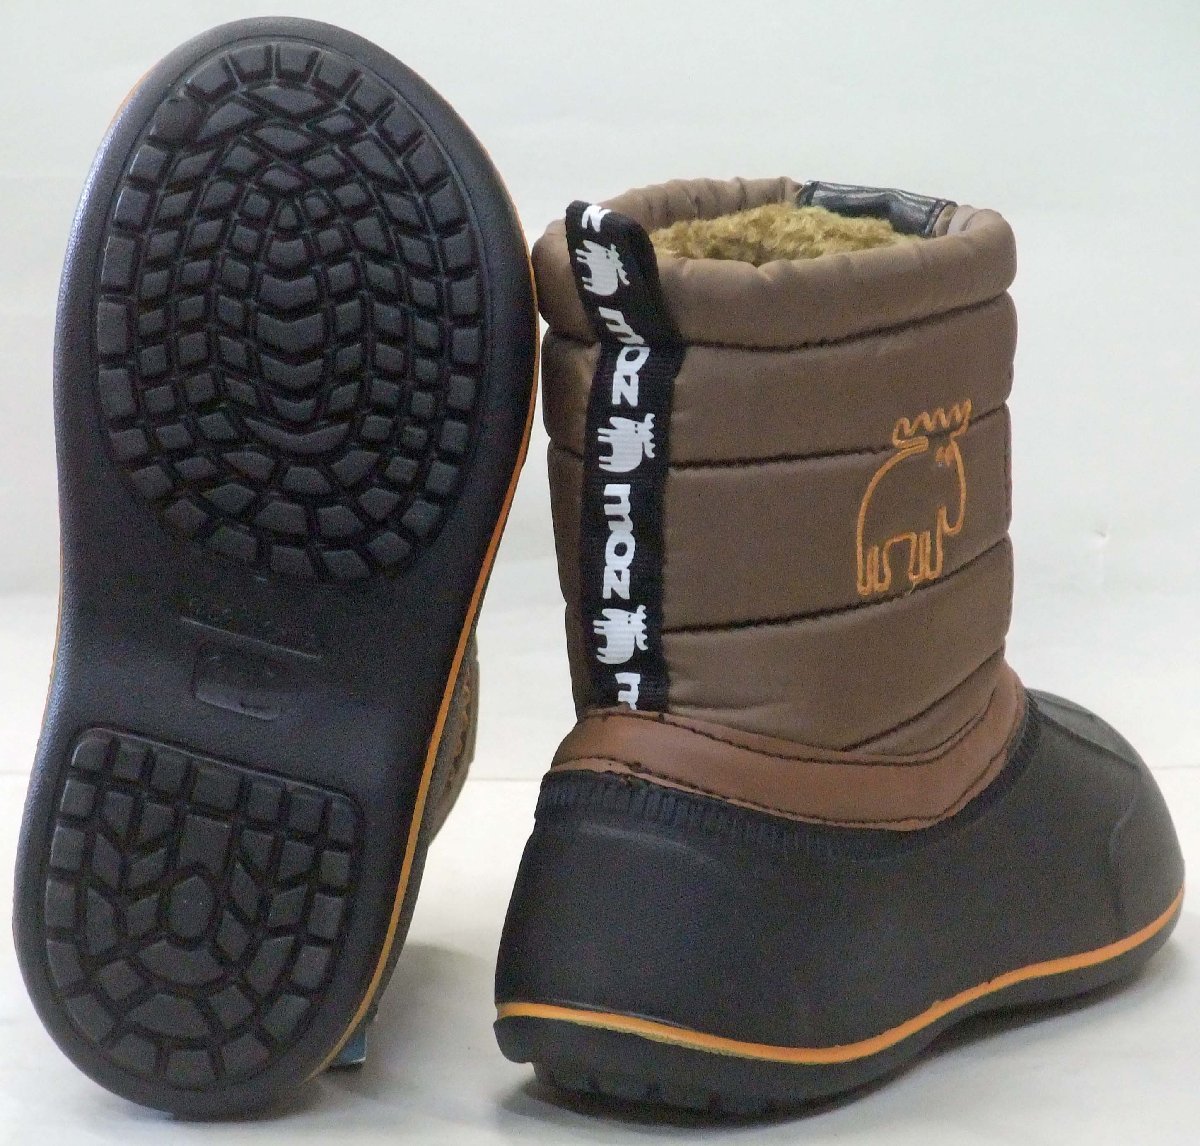  доставка бесплатно  MOZ ... MZ-8209  водонепроницаемый   защита от холода   ... ботинки  ... 19cm  детский   легкий (по весу)   снег  ... ботинки  ... ...  тёплый   снег  страна Характеристики 